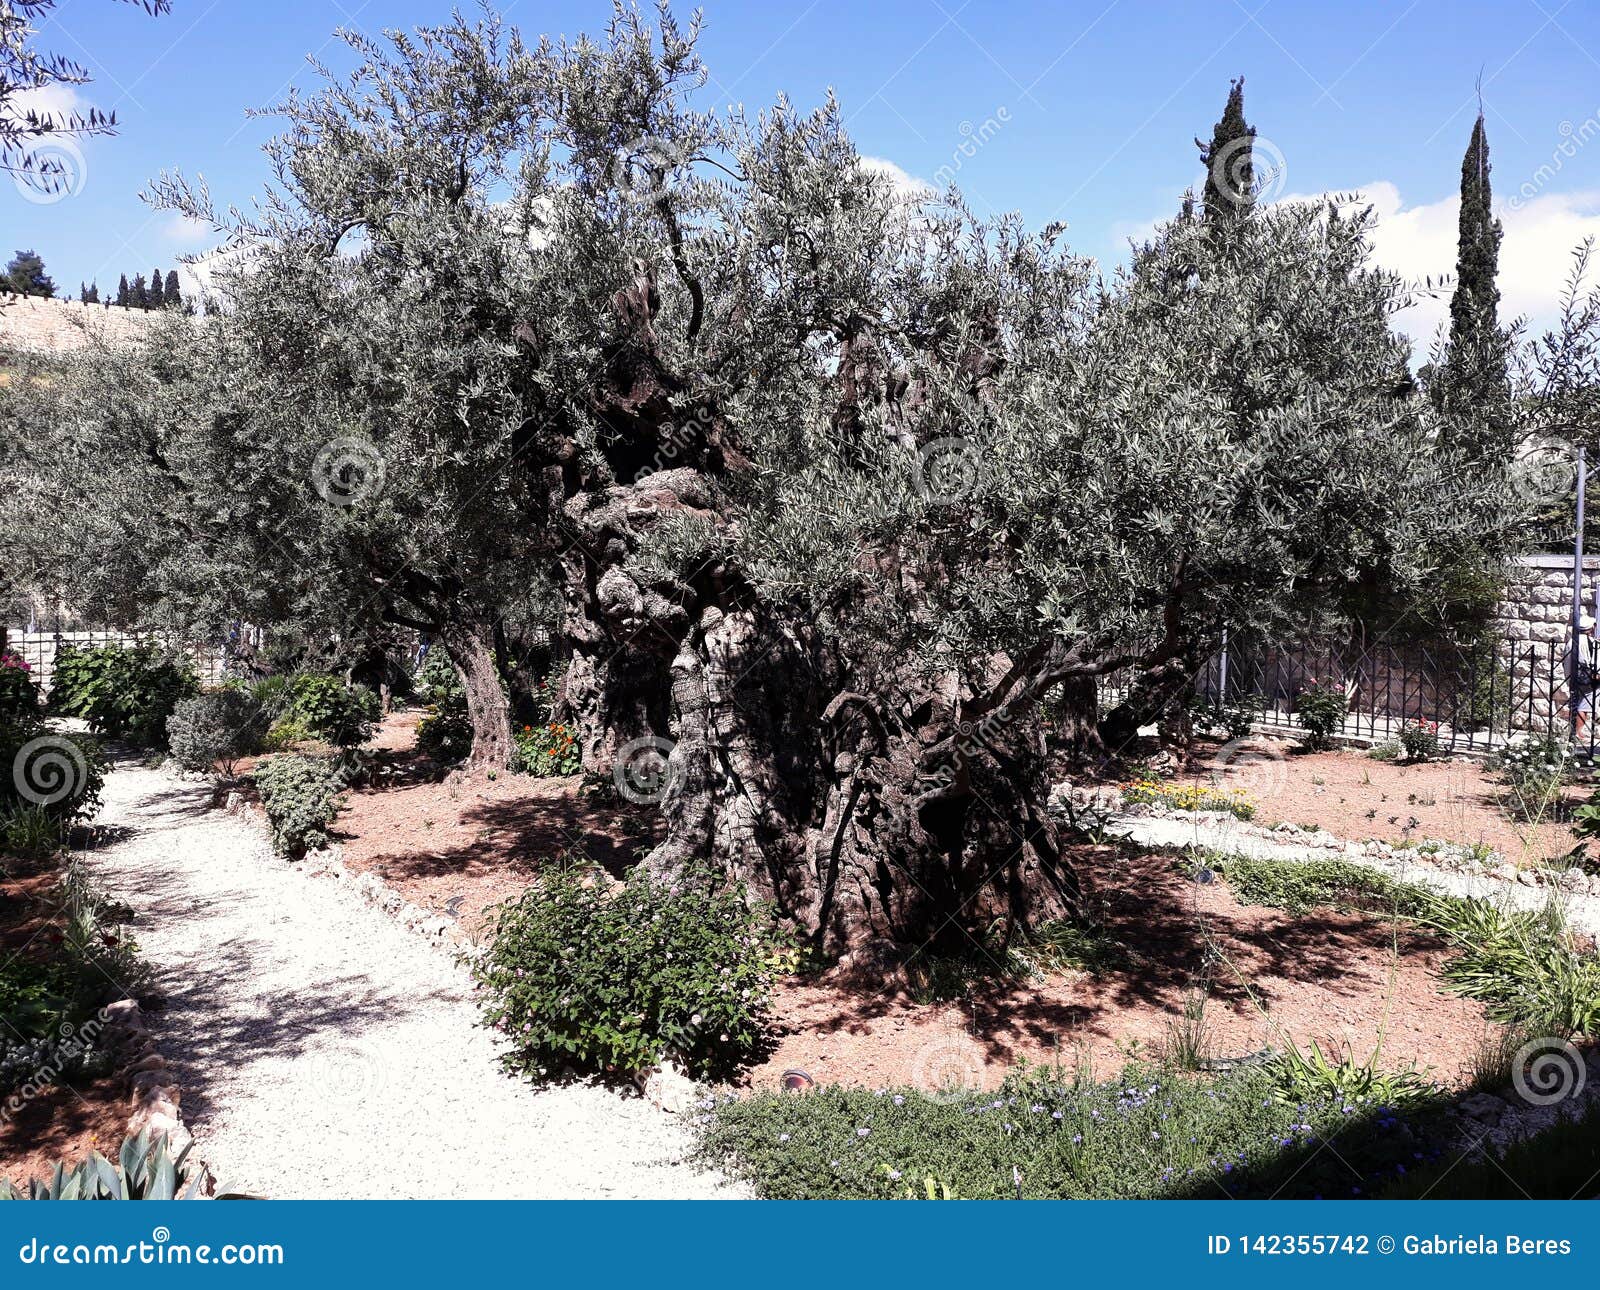 Garden Of Gethsemane In Jerusalem Israel Stock Photo Image Of